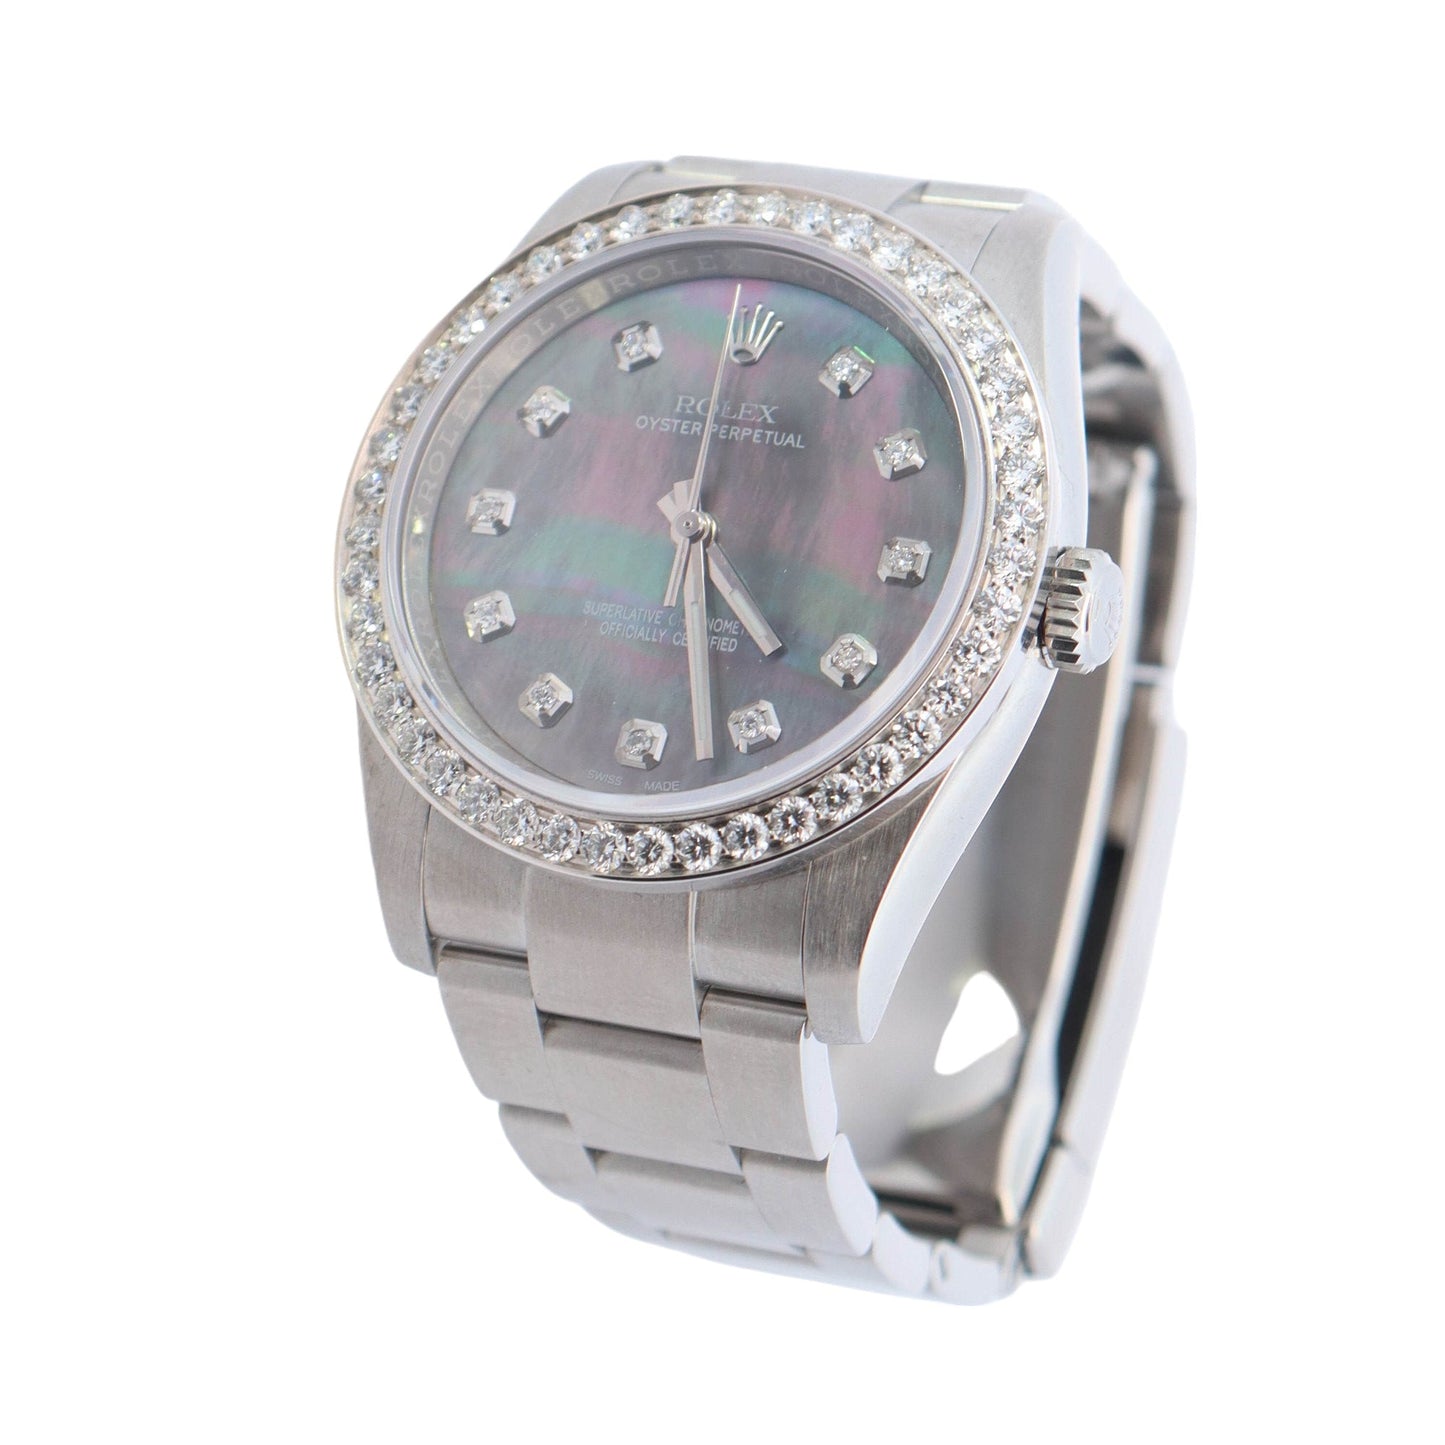 Rolex Oyster Perpetual Stainless Steel 36mm Custom Dark MOP Diamond Dial Watch Reference #;116000 - Happy Jewelers Fine Jewelry Lifetime Warranty